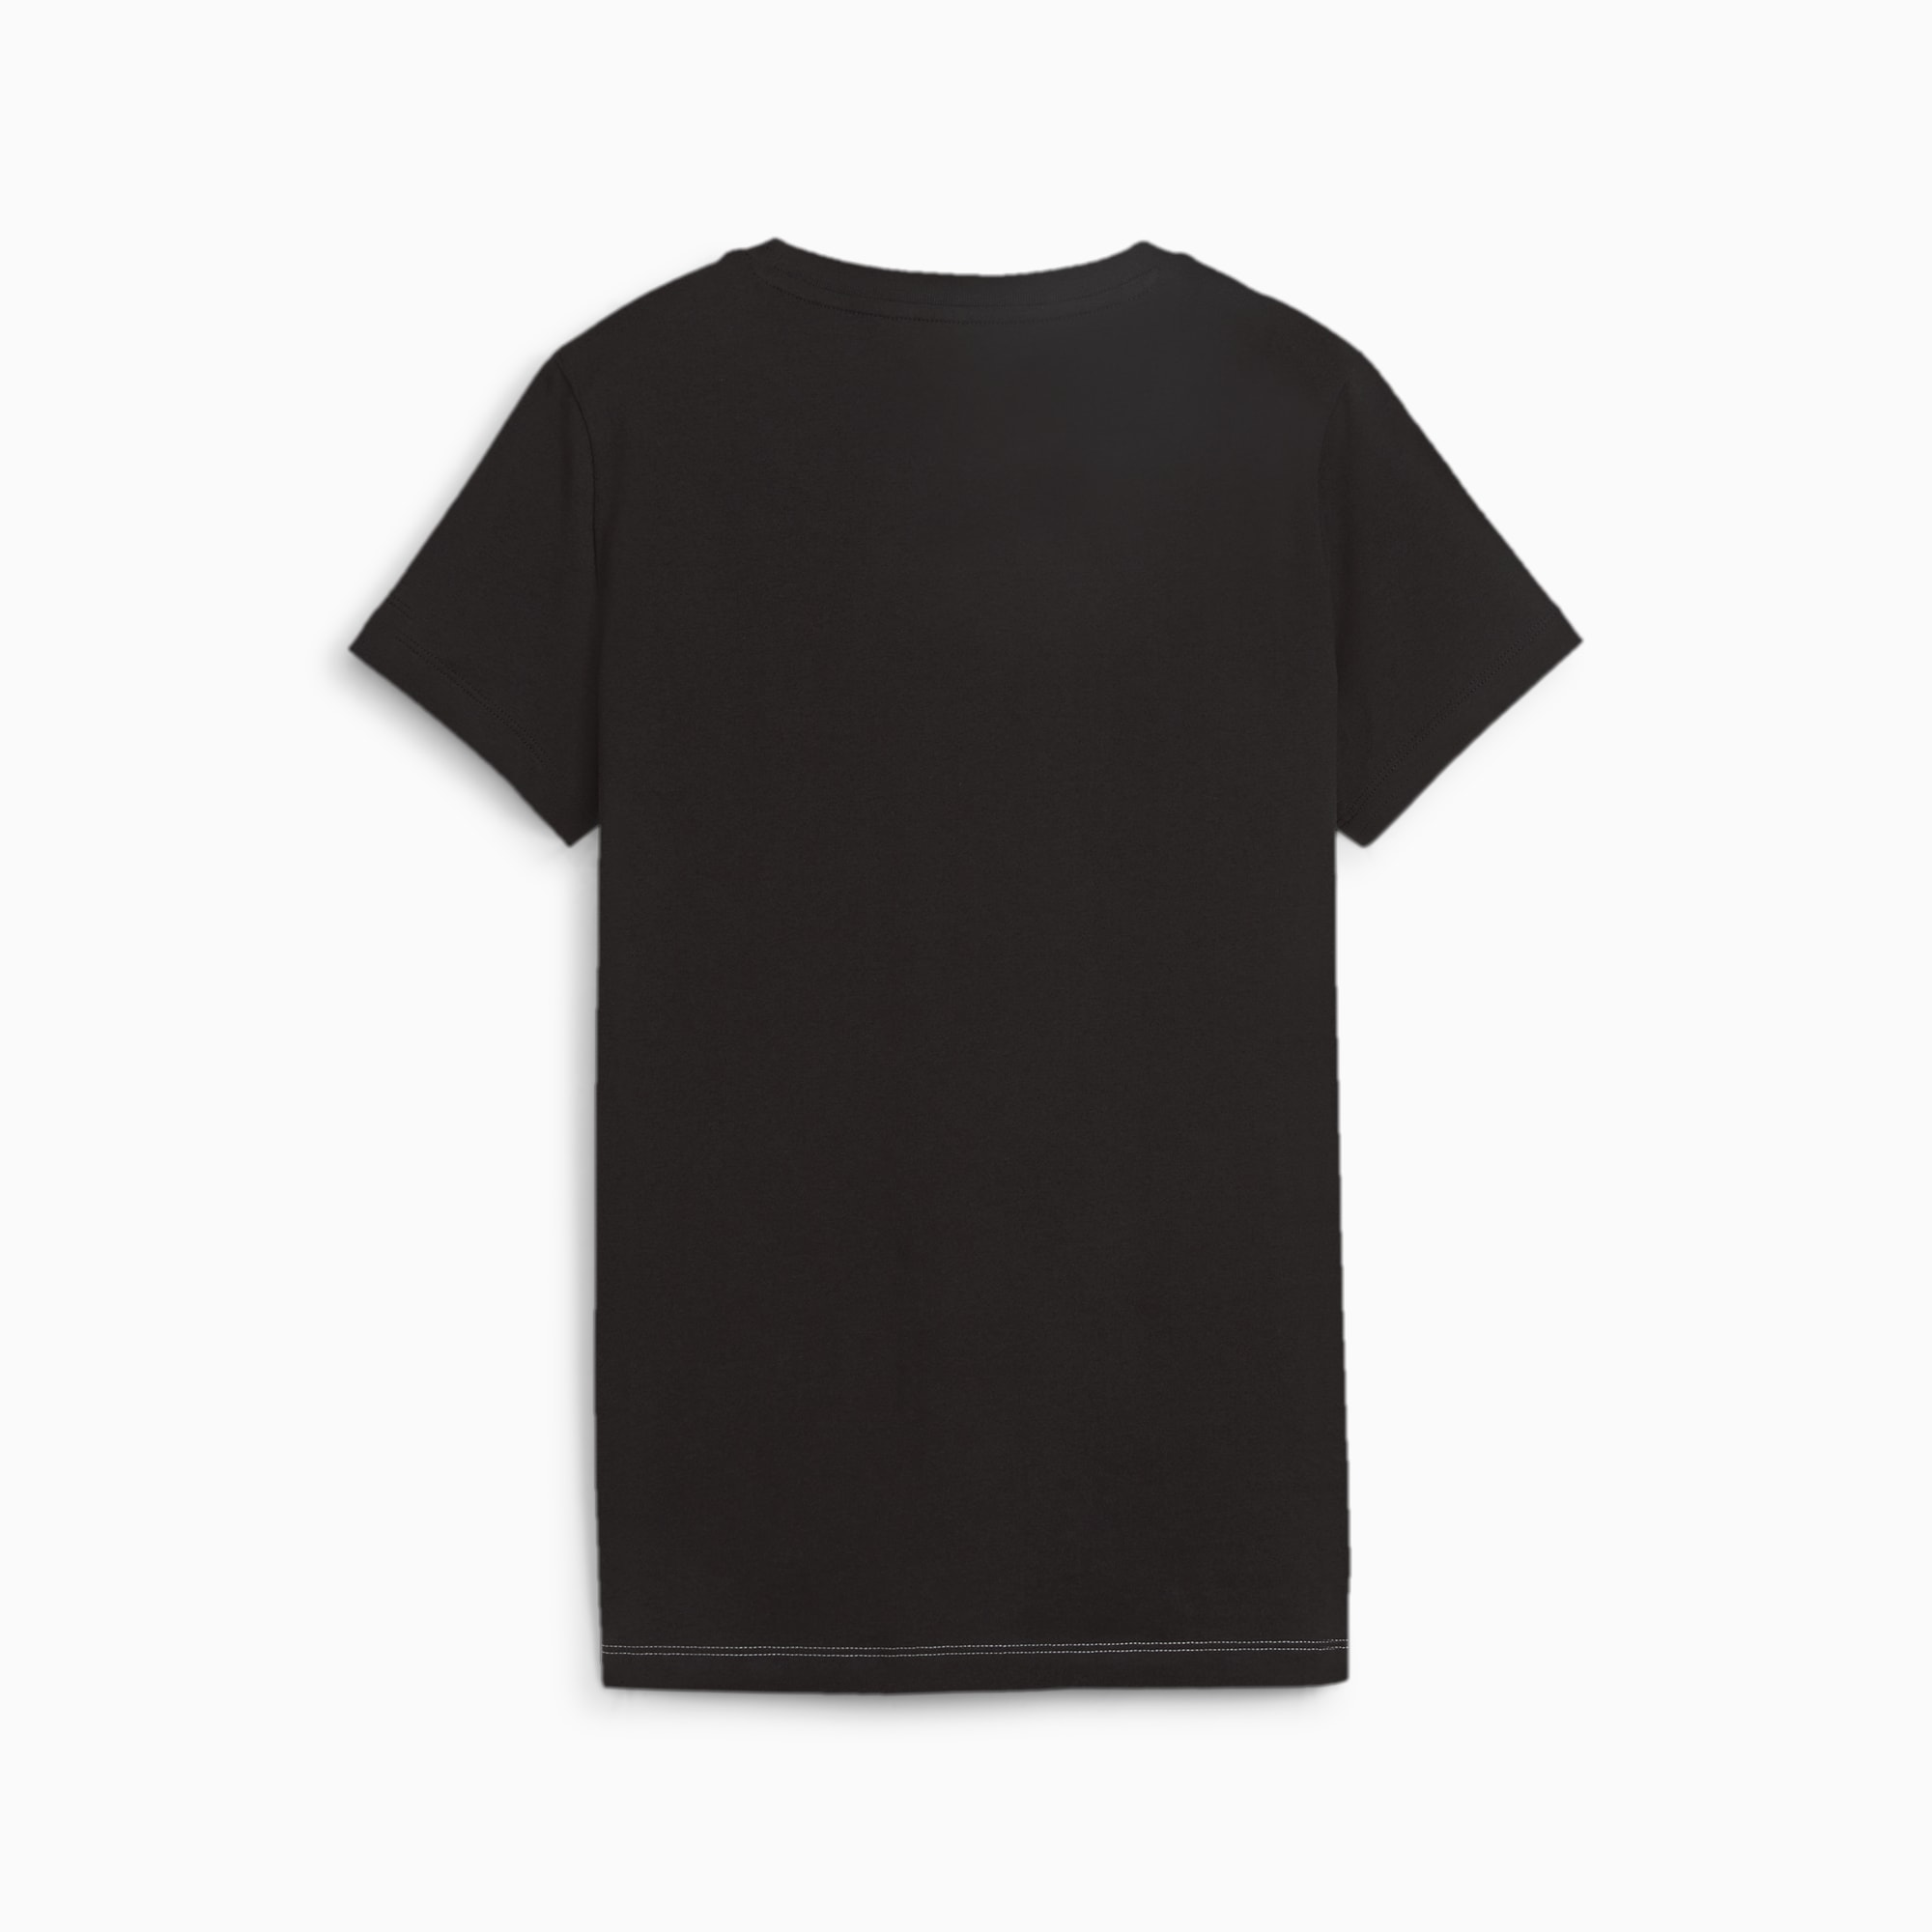 PUMA Power Women's T-Shirt, Black, Size M, Clothing